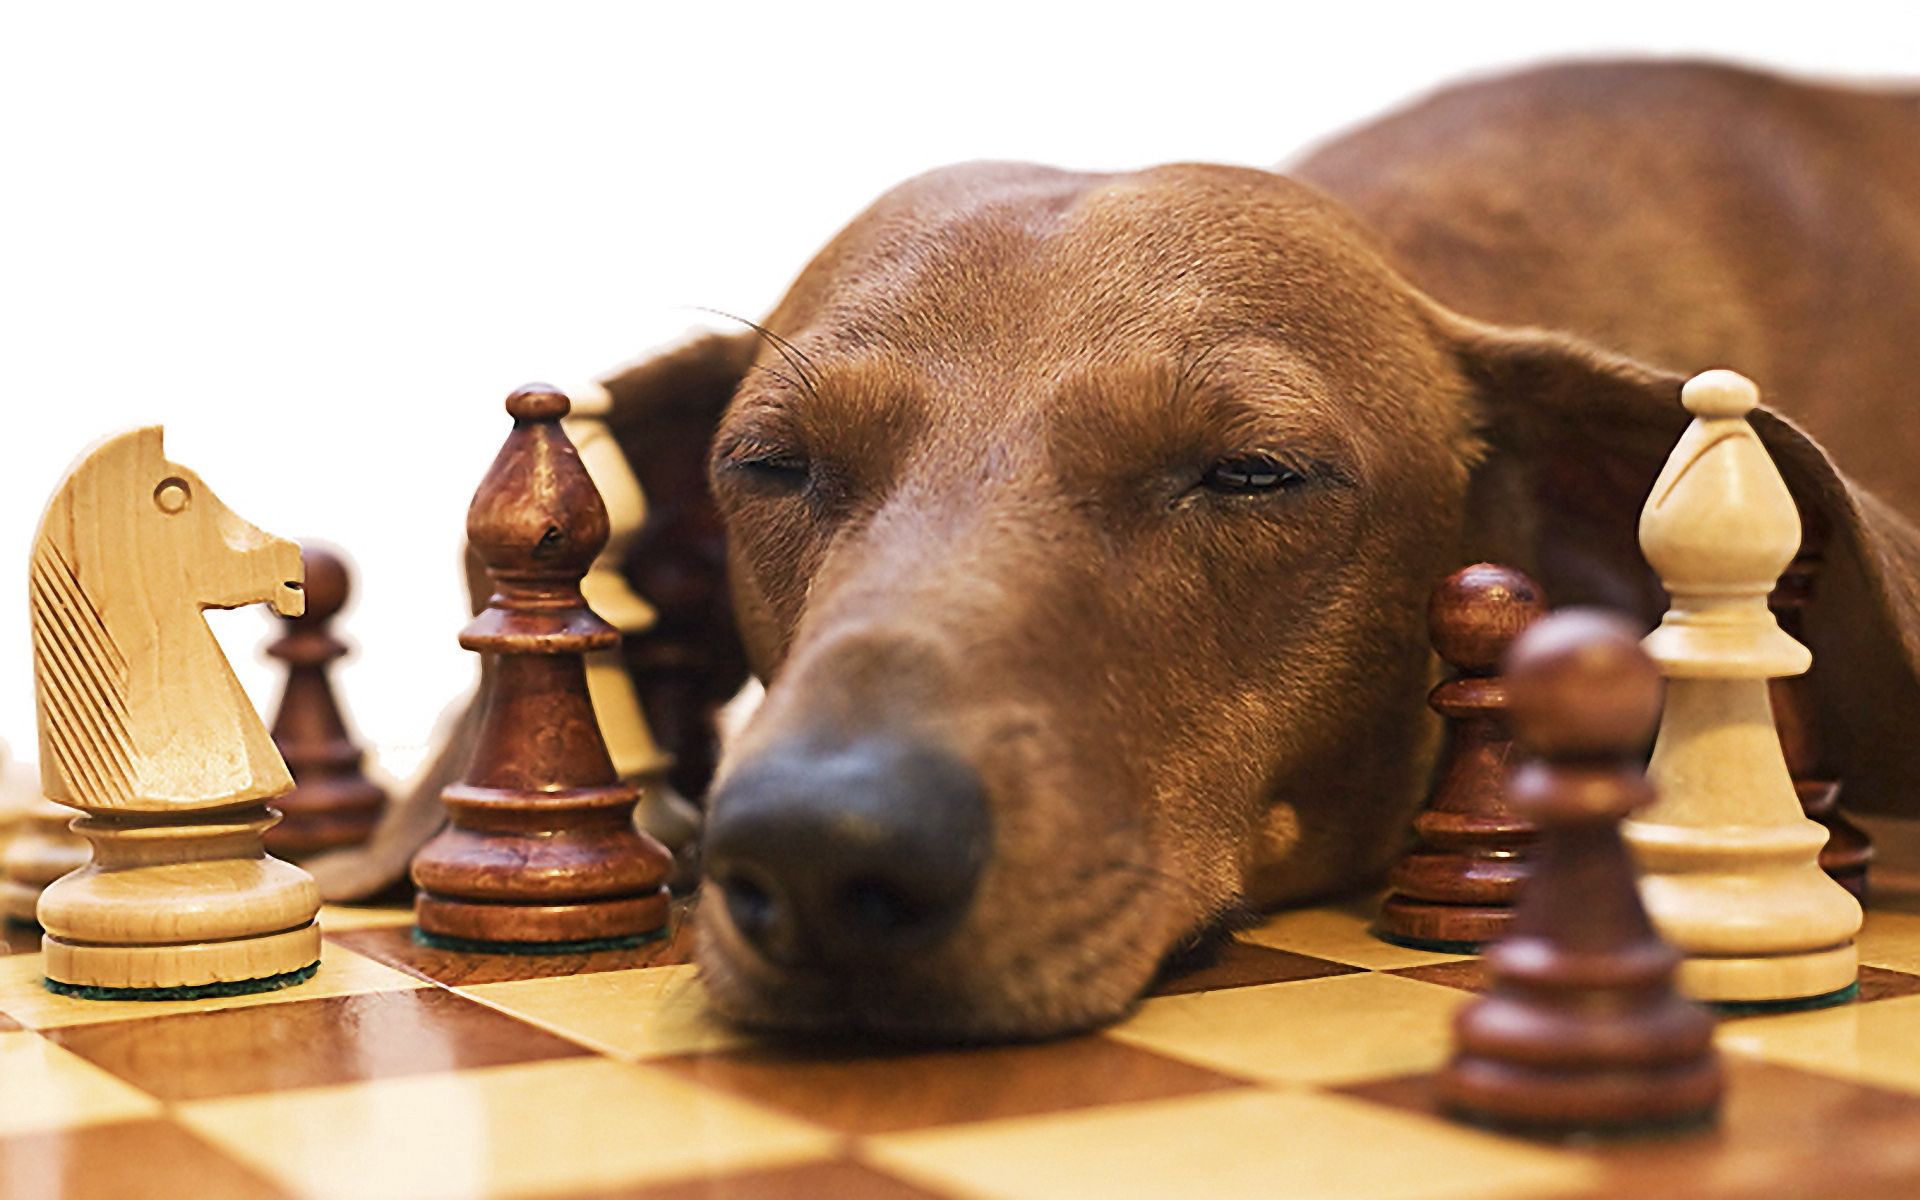 dachshund, chess, animals, dog, muzzle, fatigue